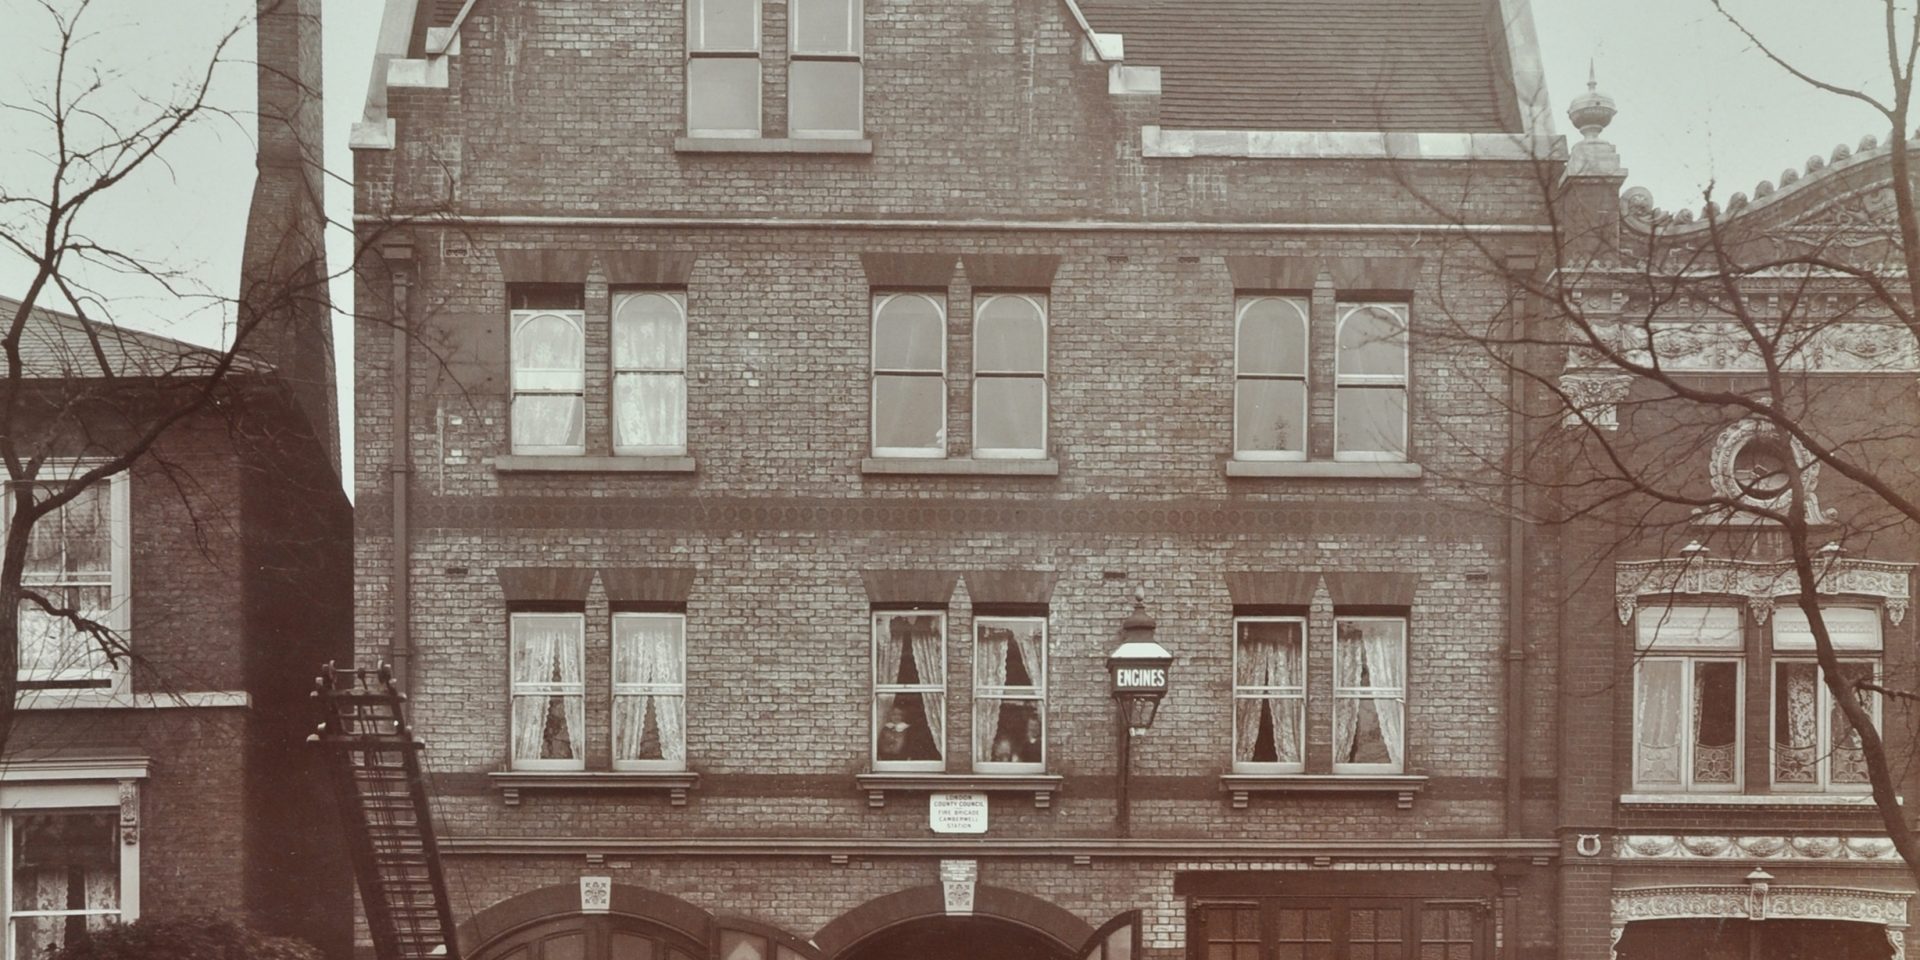 .Peckham Road Fire Station, 1905